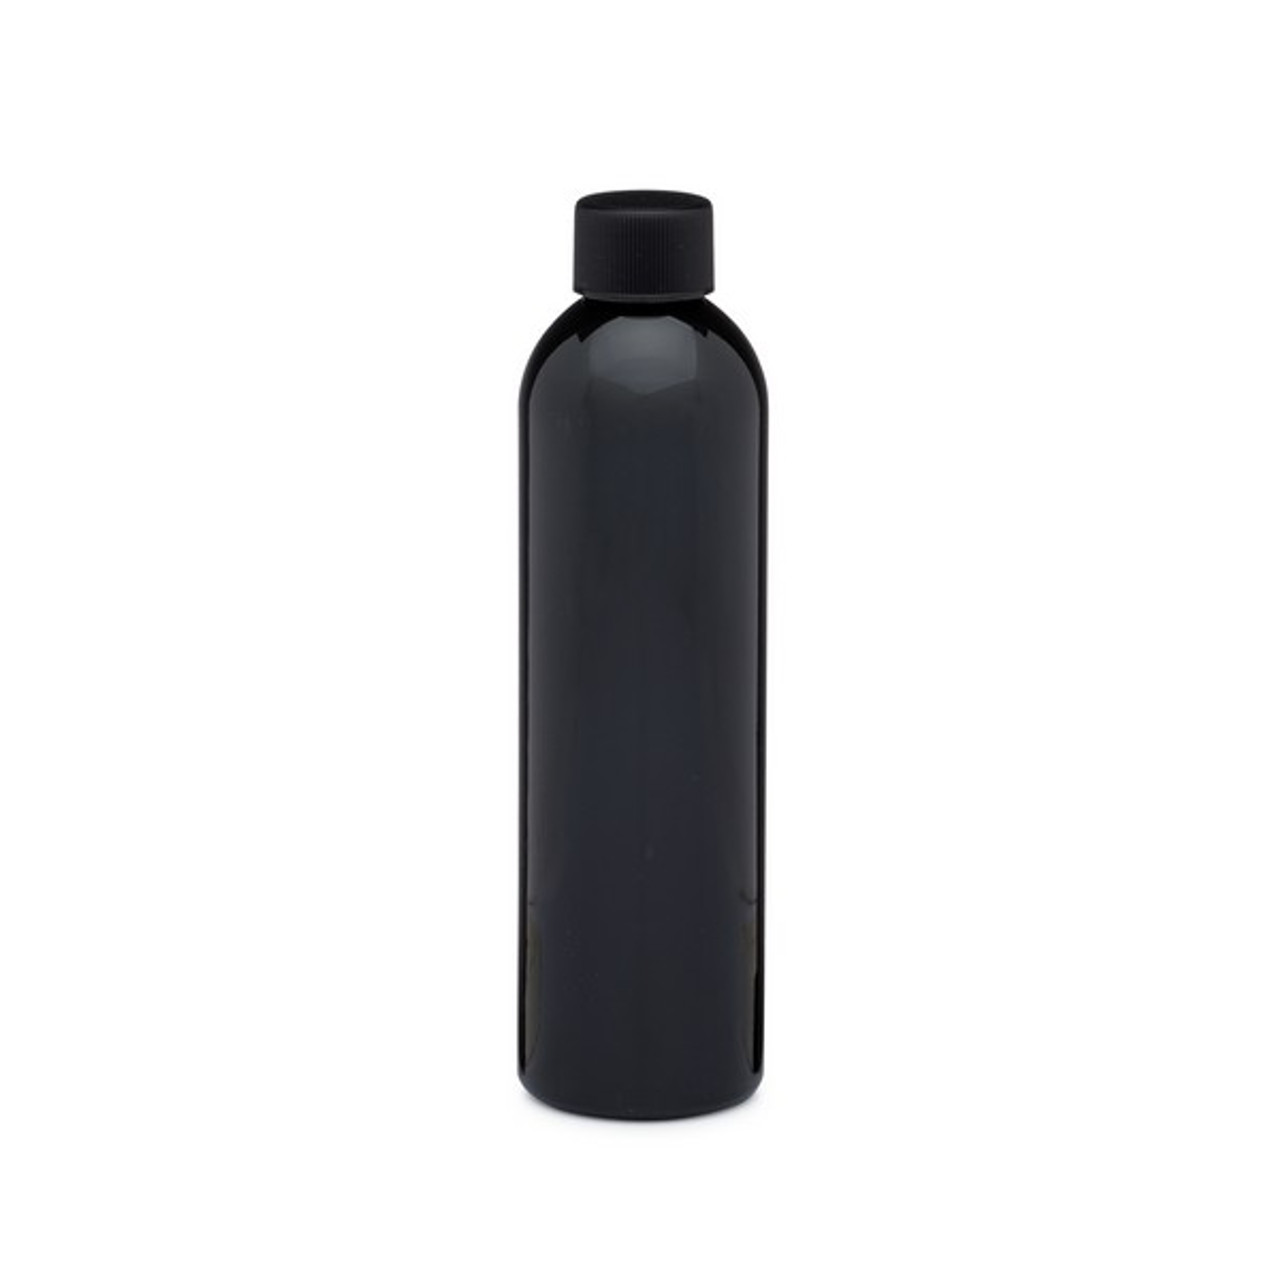 8 oz Black PET Bullet Bottles (Black Screw Top Cap)